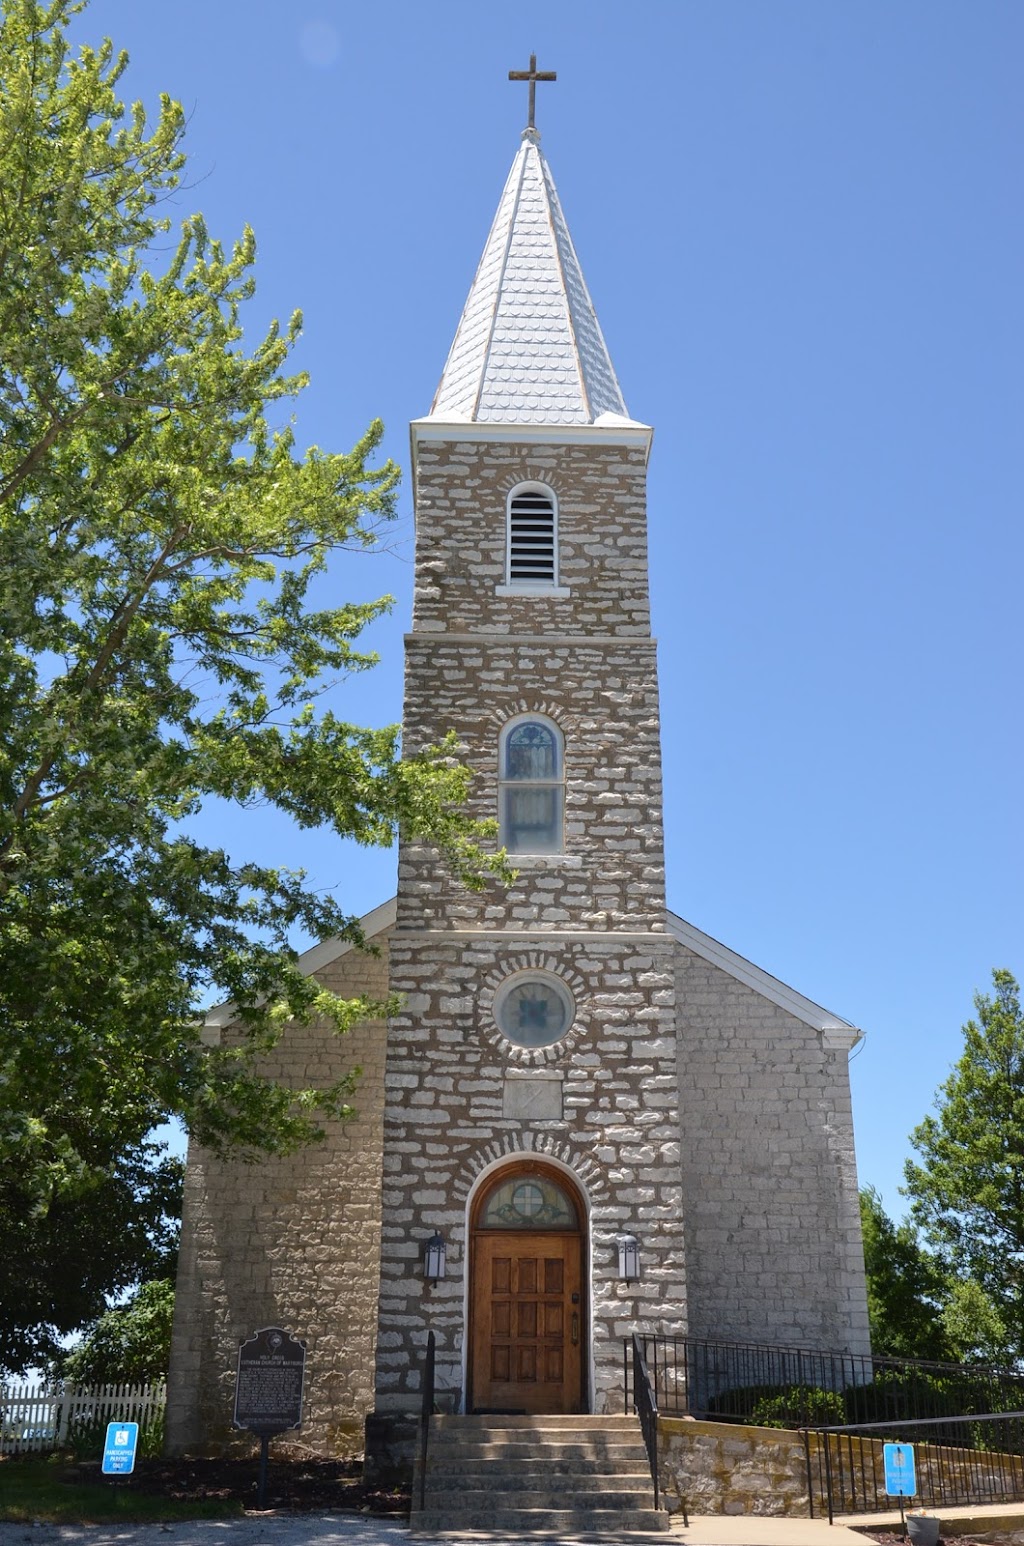 Holy Cross Lutheran Church | 5765 Maeystown Rd, Waterloo, IL 62298 | Phone: (618) 939-7094